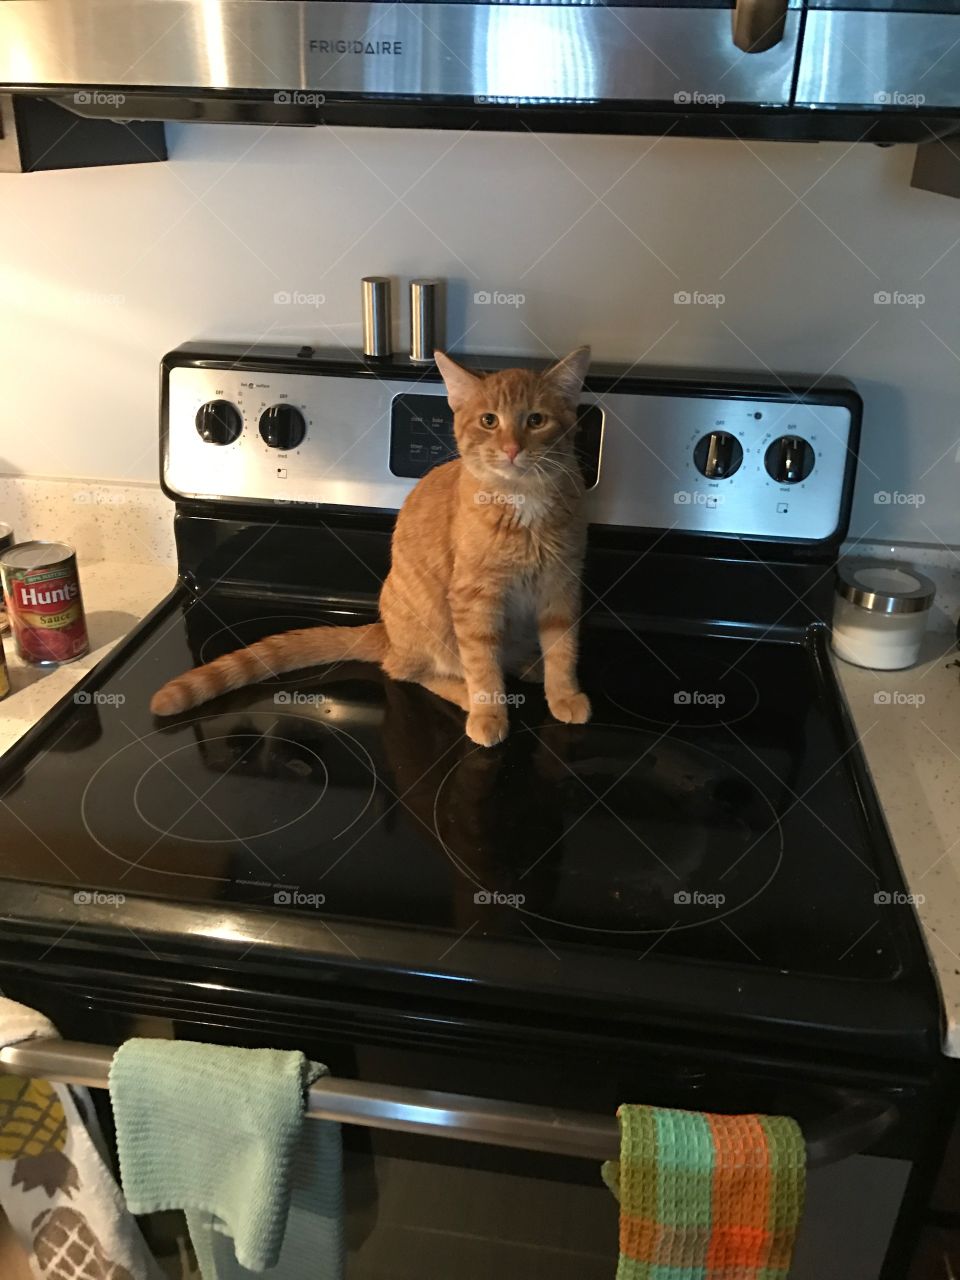 Cat on stove 